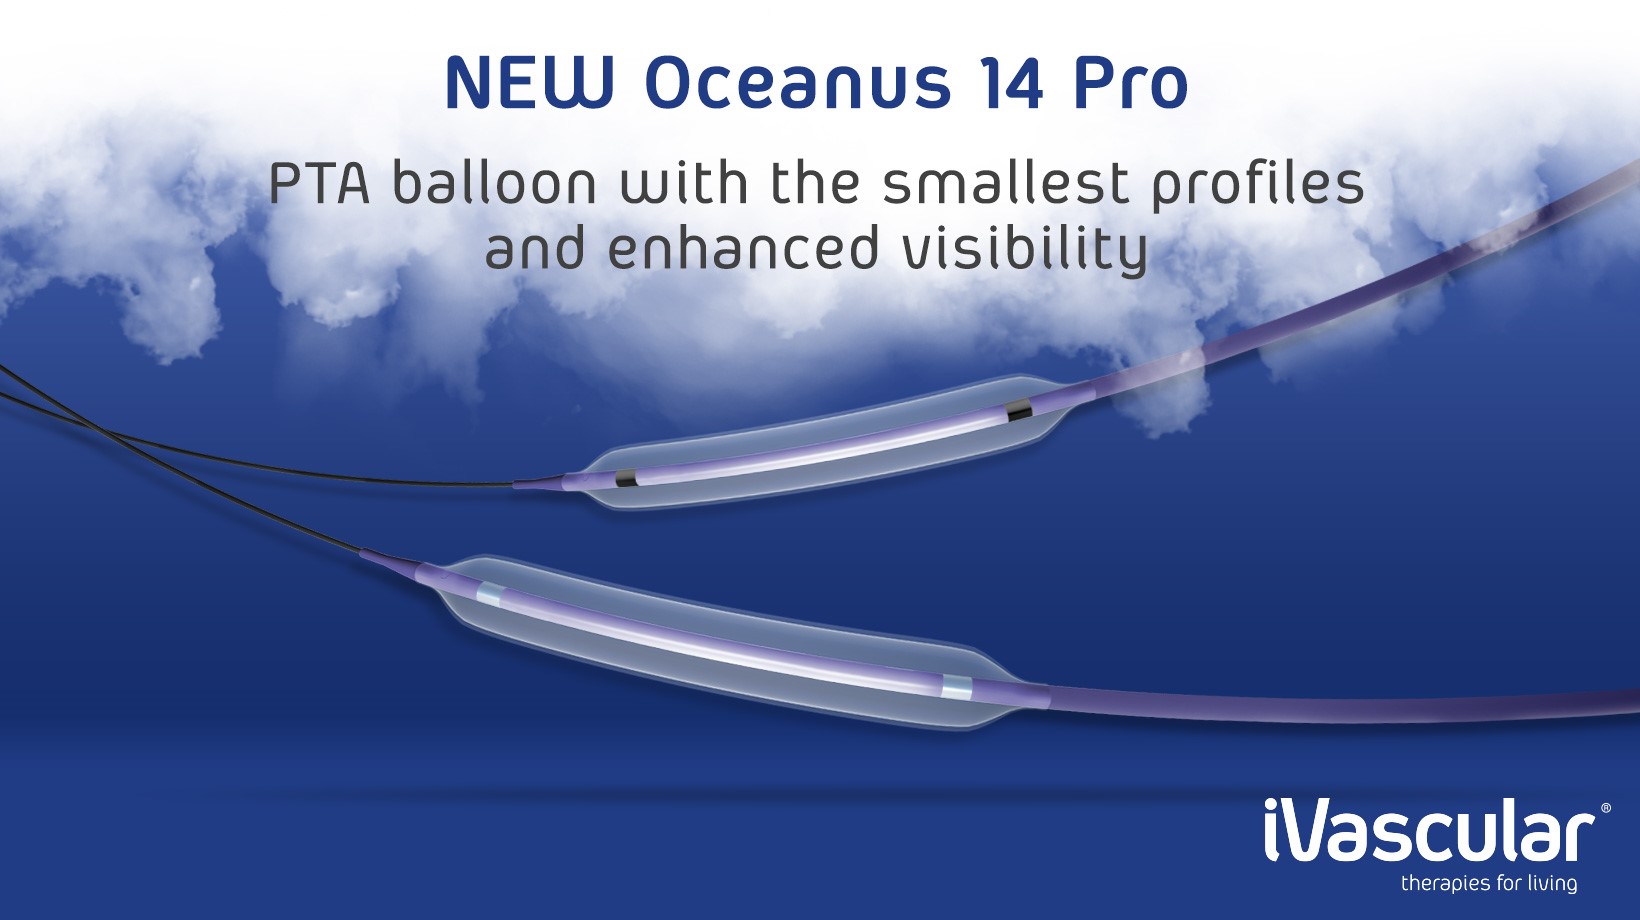 Oceanus 14 Pro, PTA balloon catheter receives CE Mark Approval